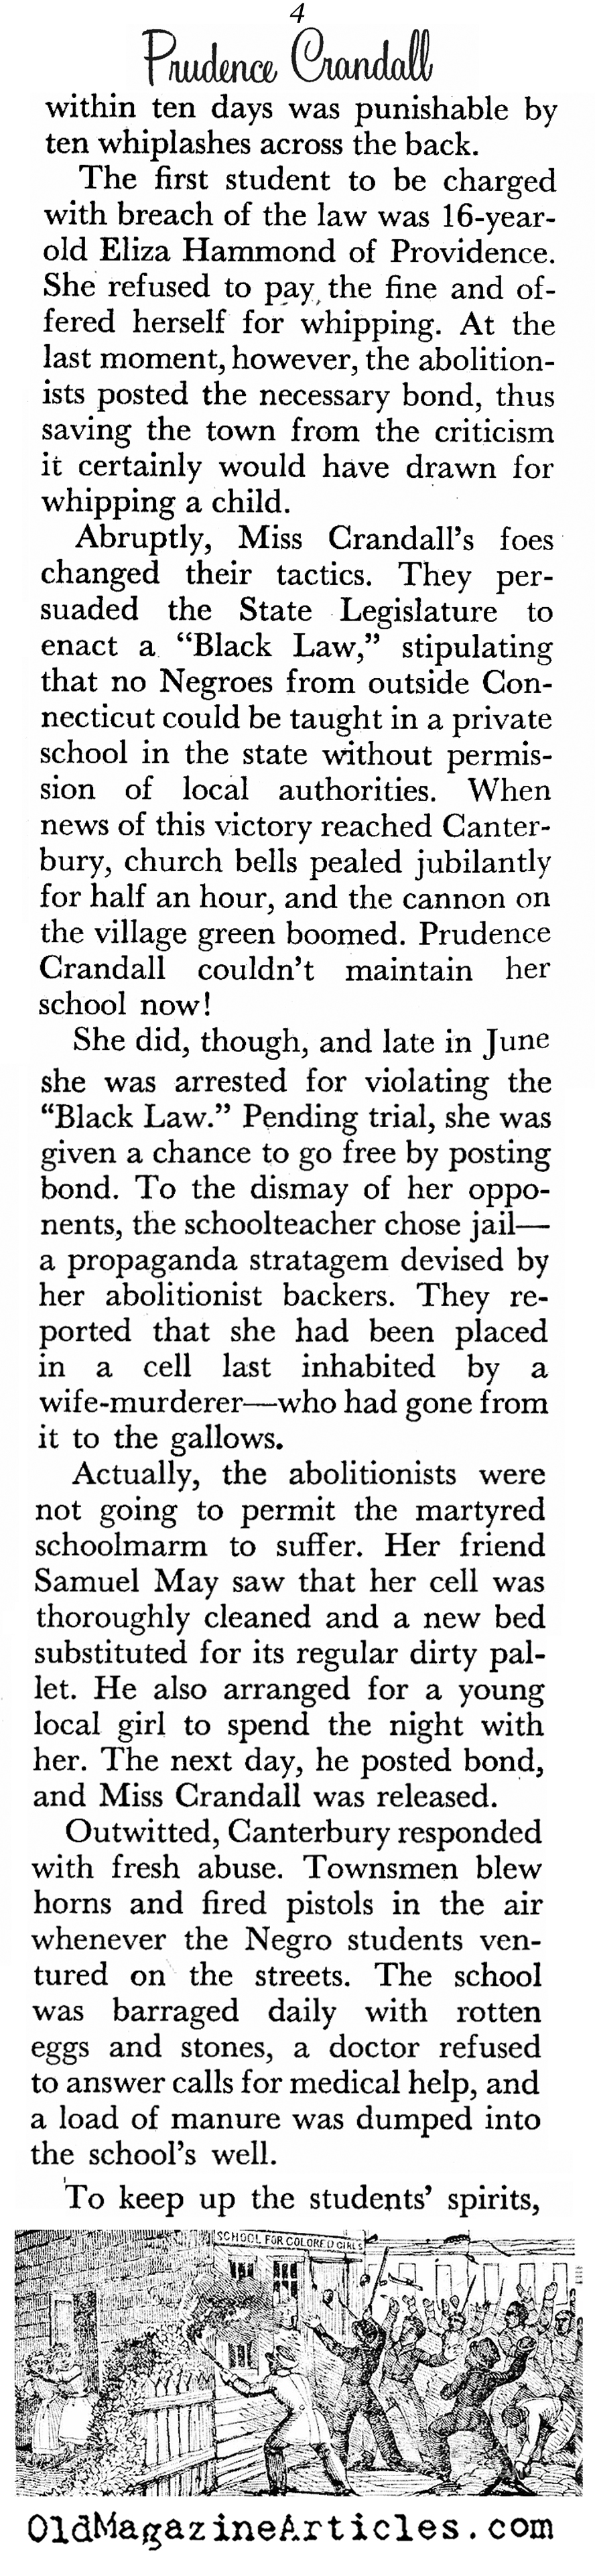 Admirable Prudence Crandall (Coronet Magazine, 1961) 